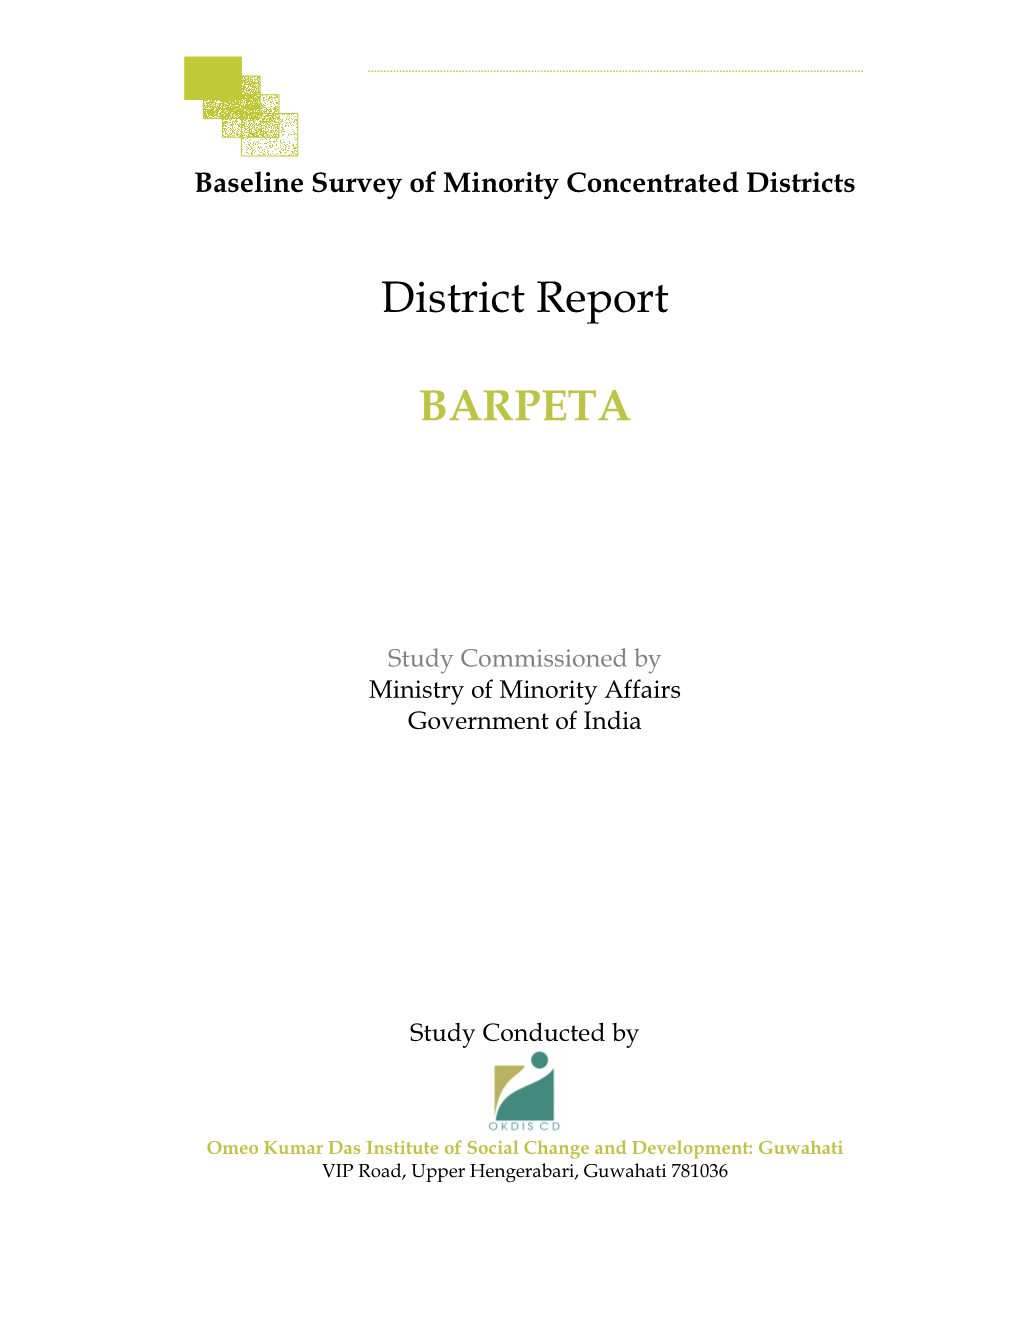 District Report BARPETA